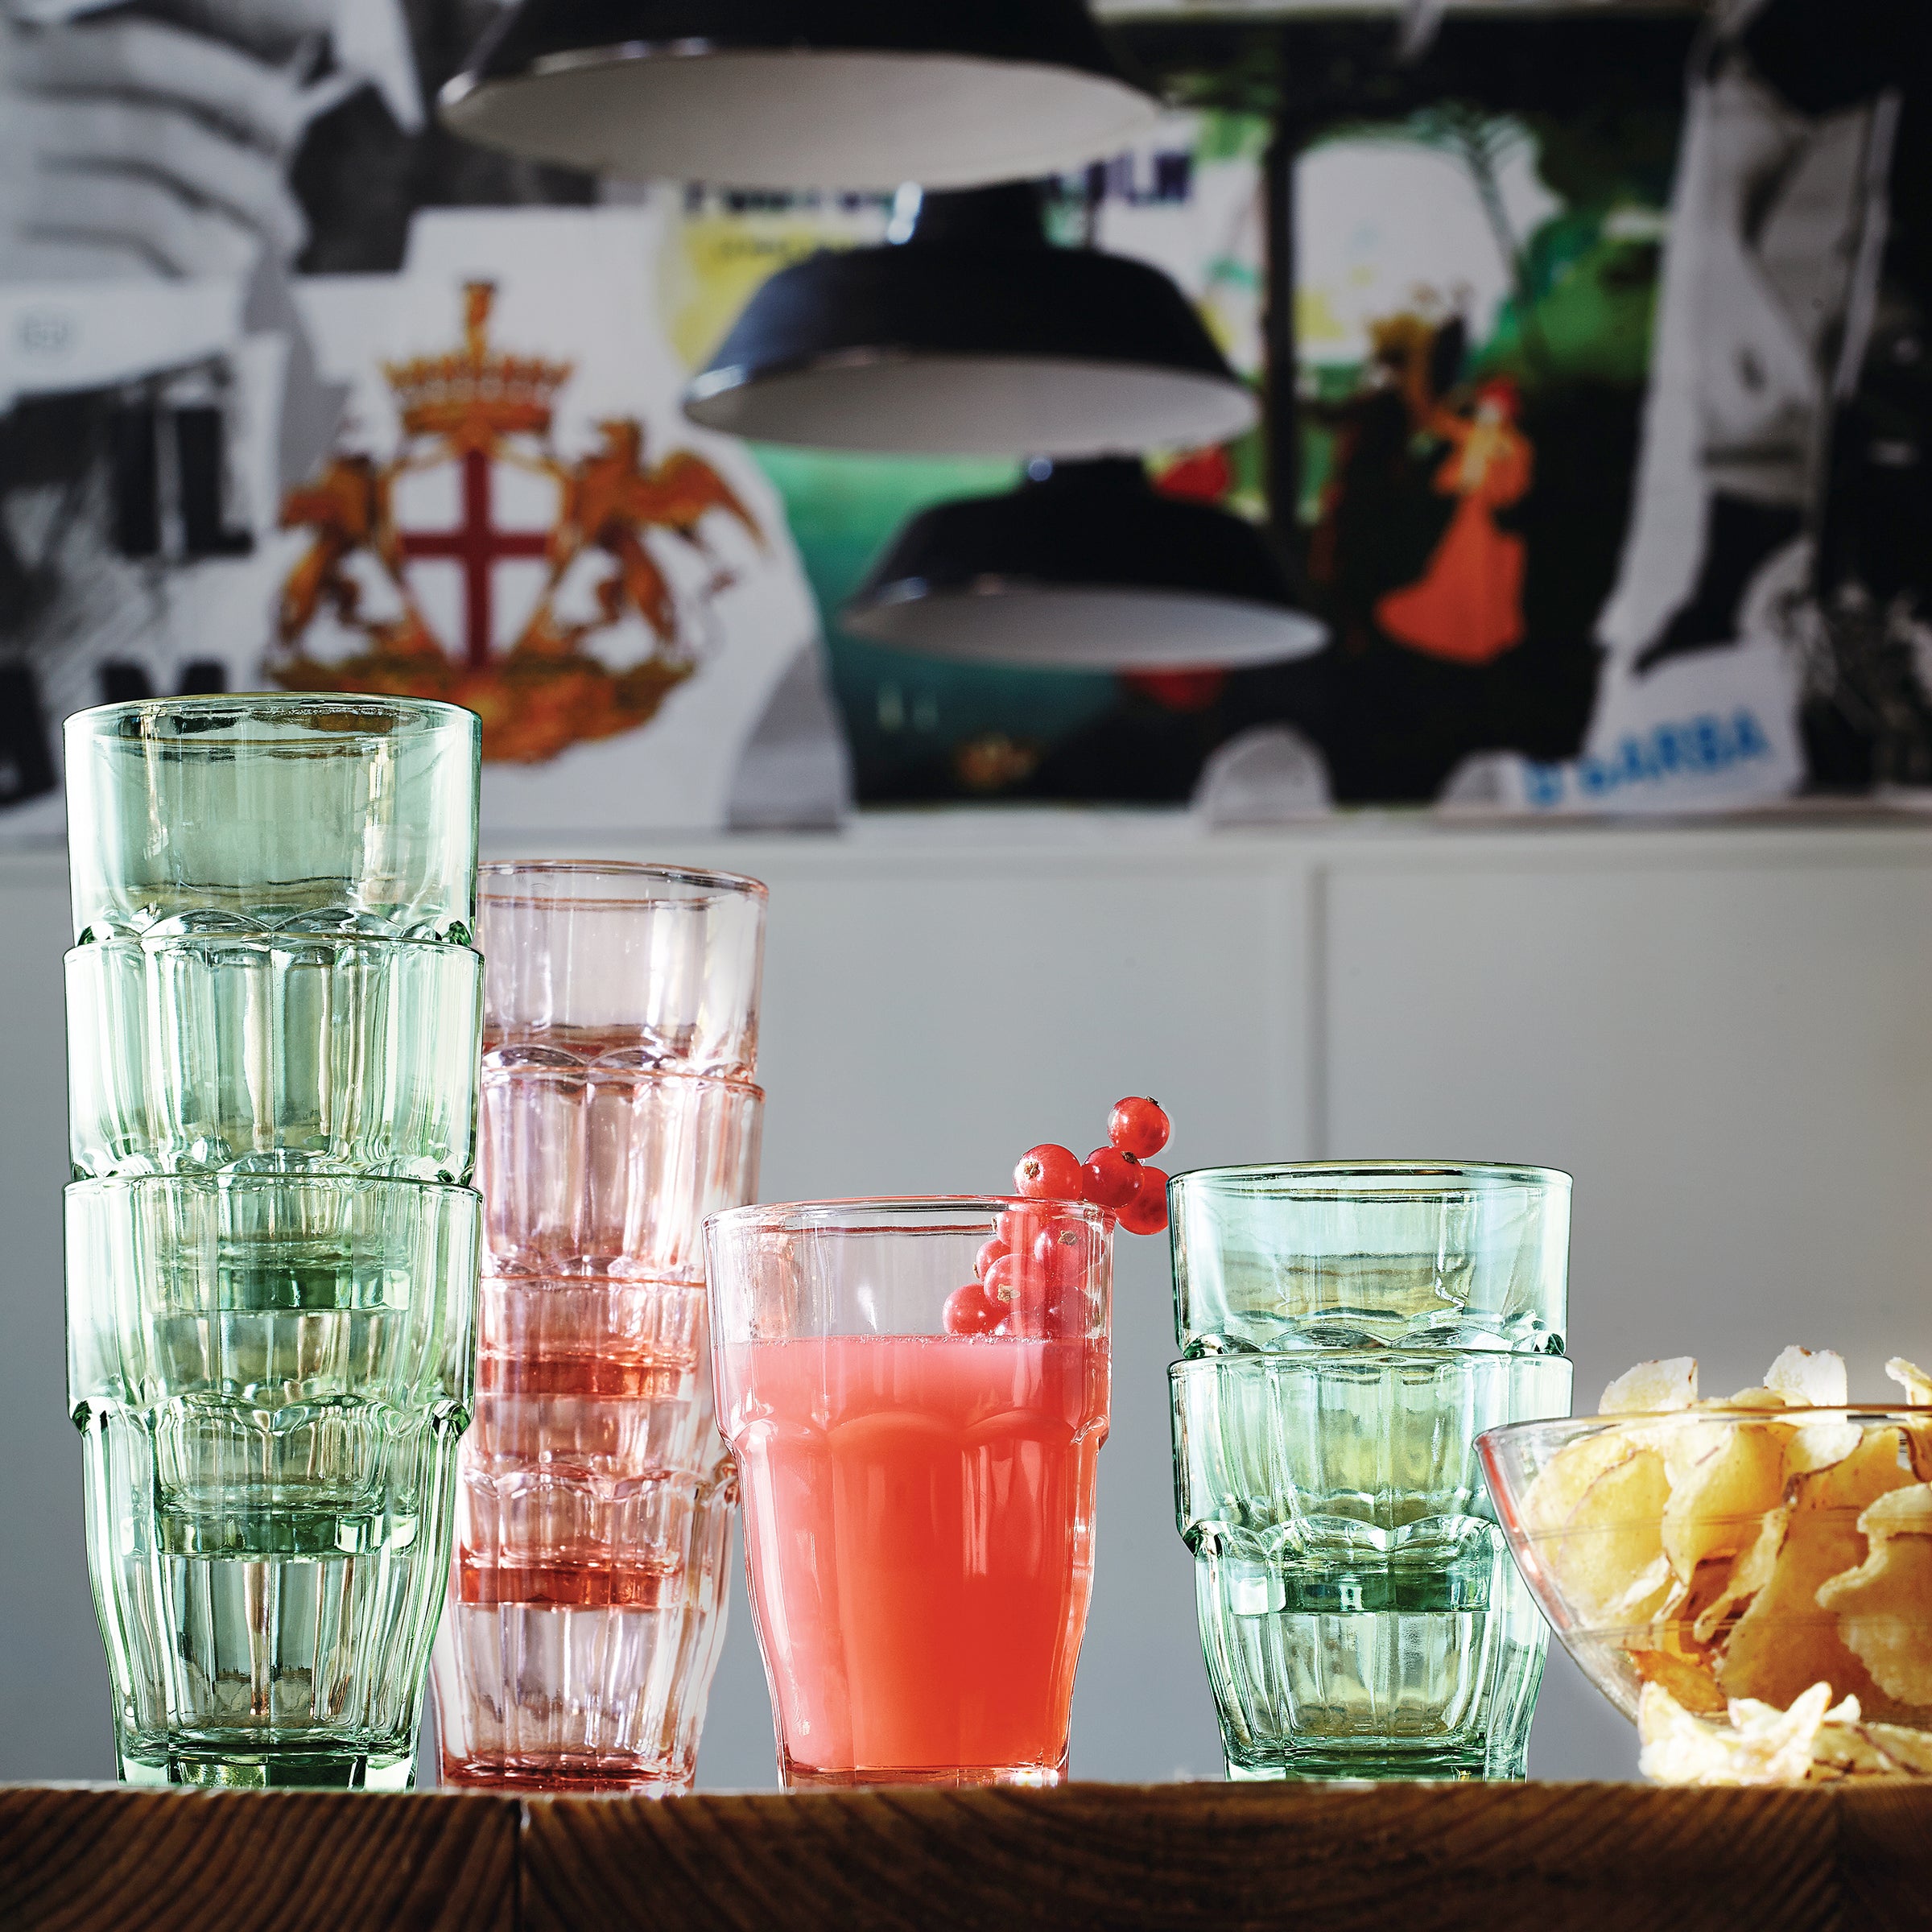 Bormioli Rocco Rock Bar Glass Tumbler Set Of 6 - 9 Oz : Target